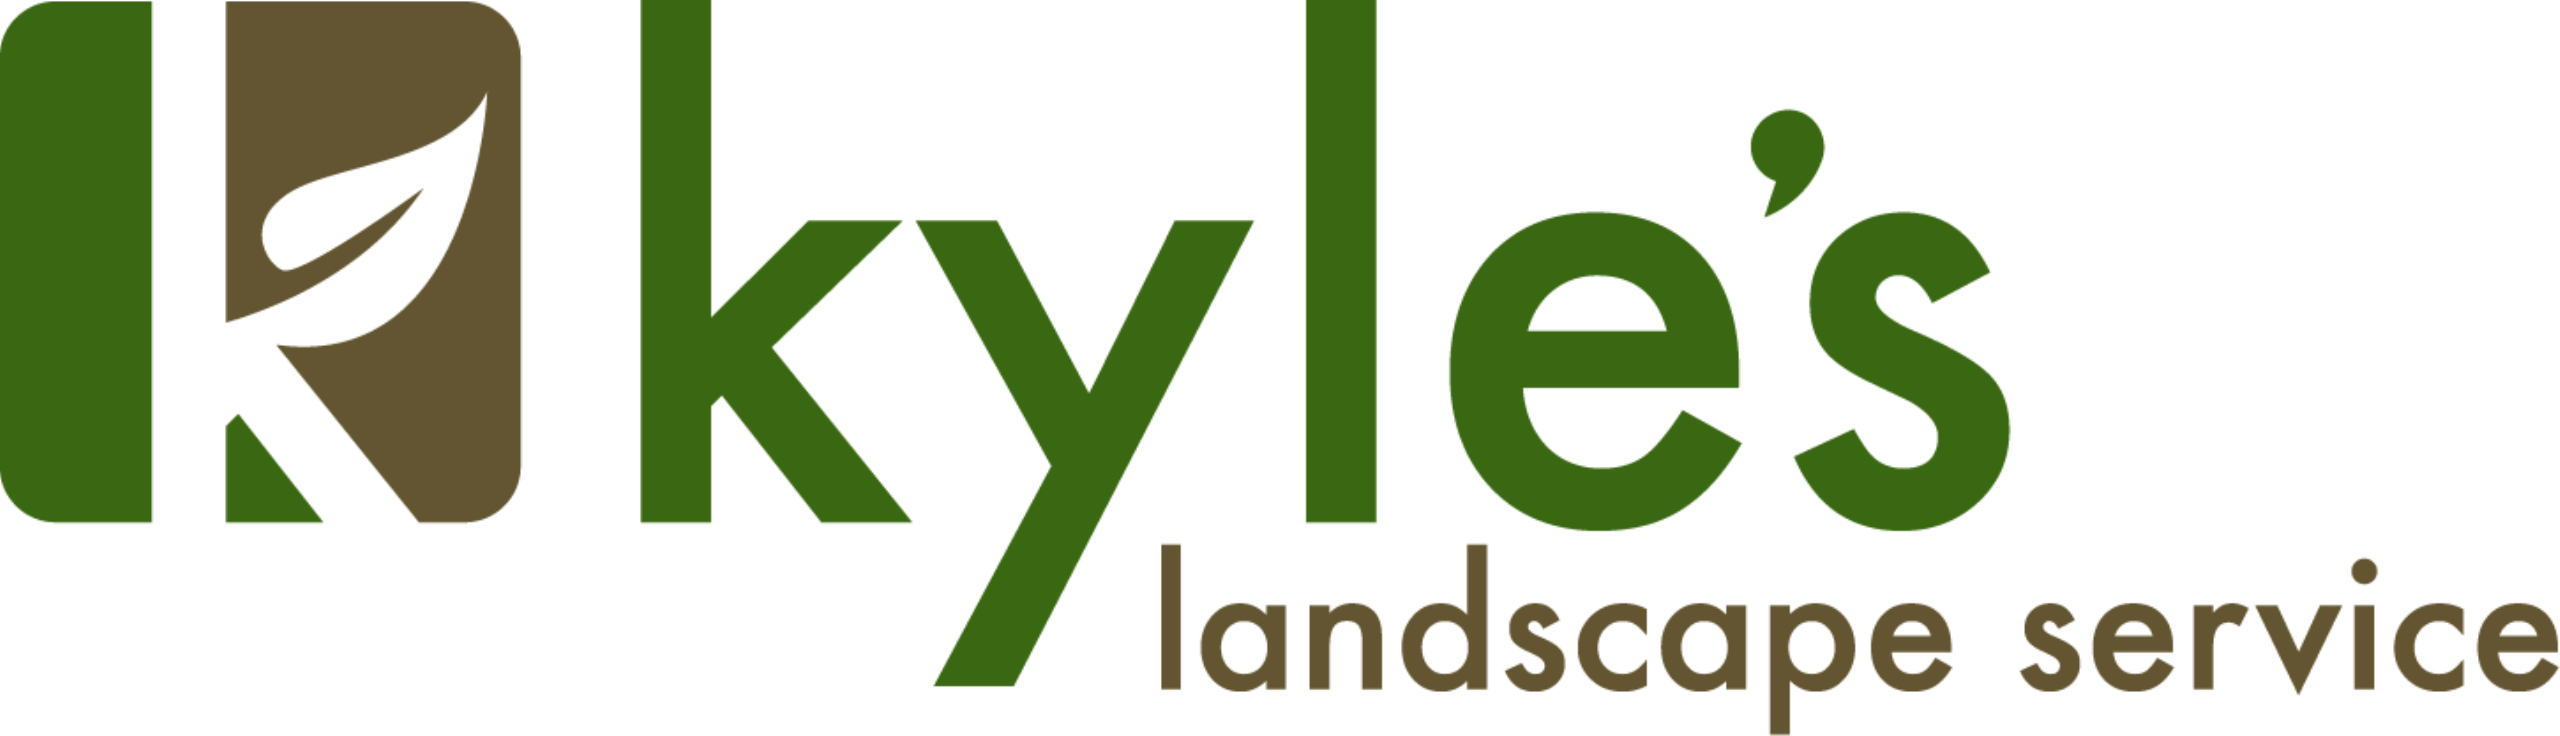 Kyle's Landscape Service Logo